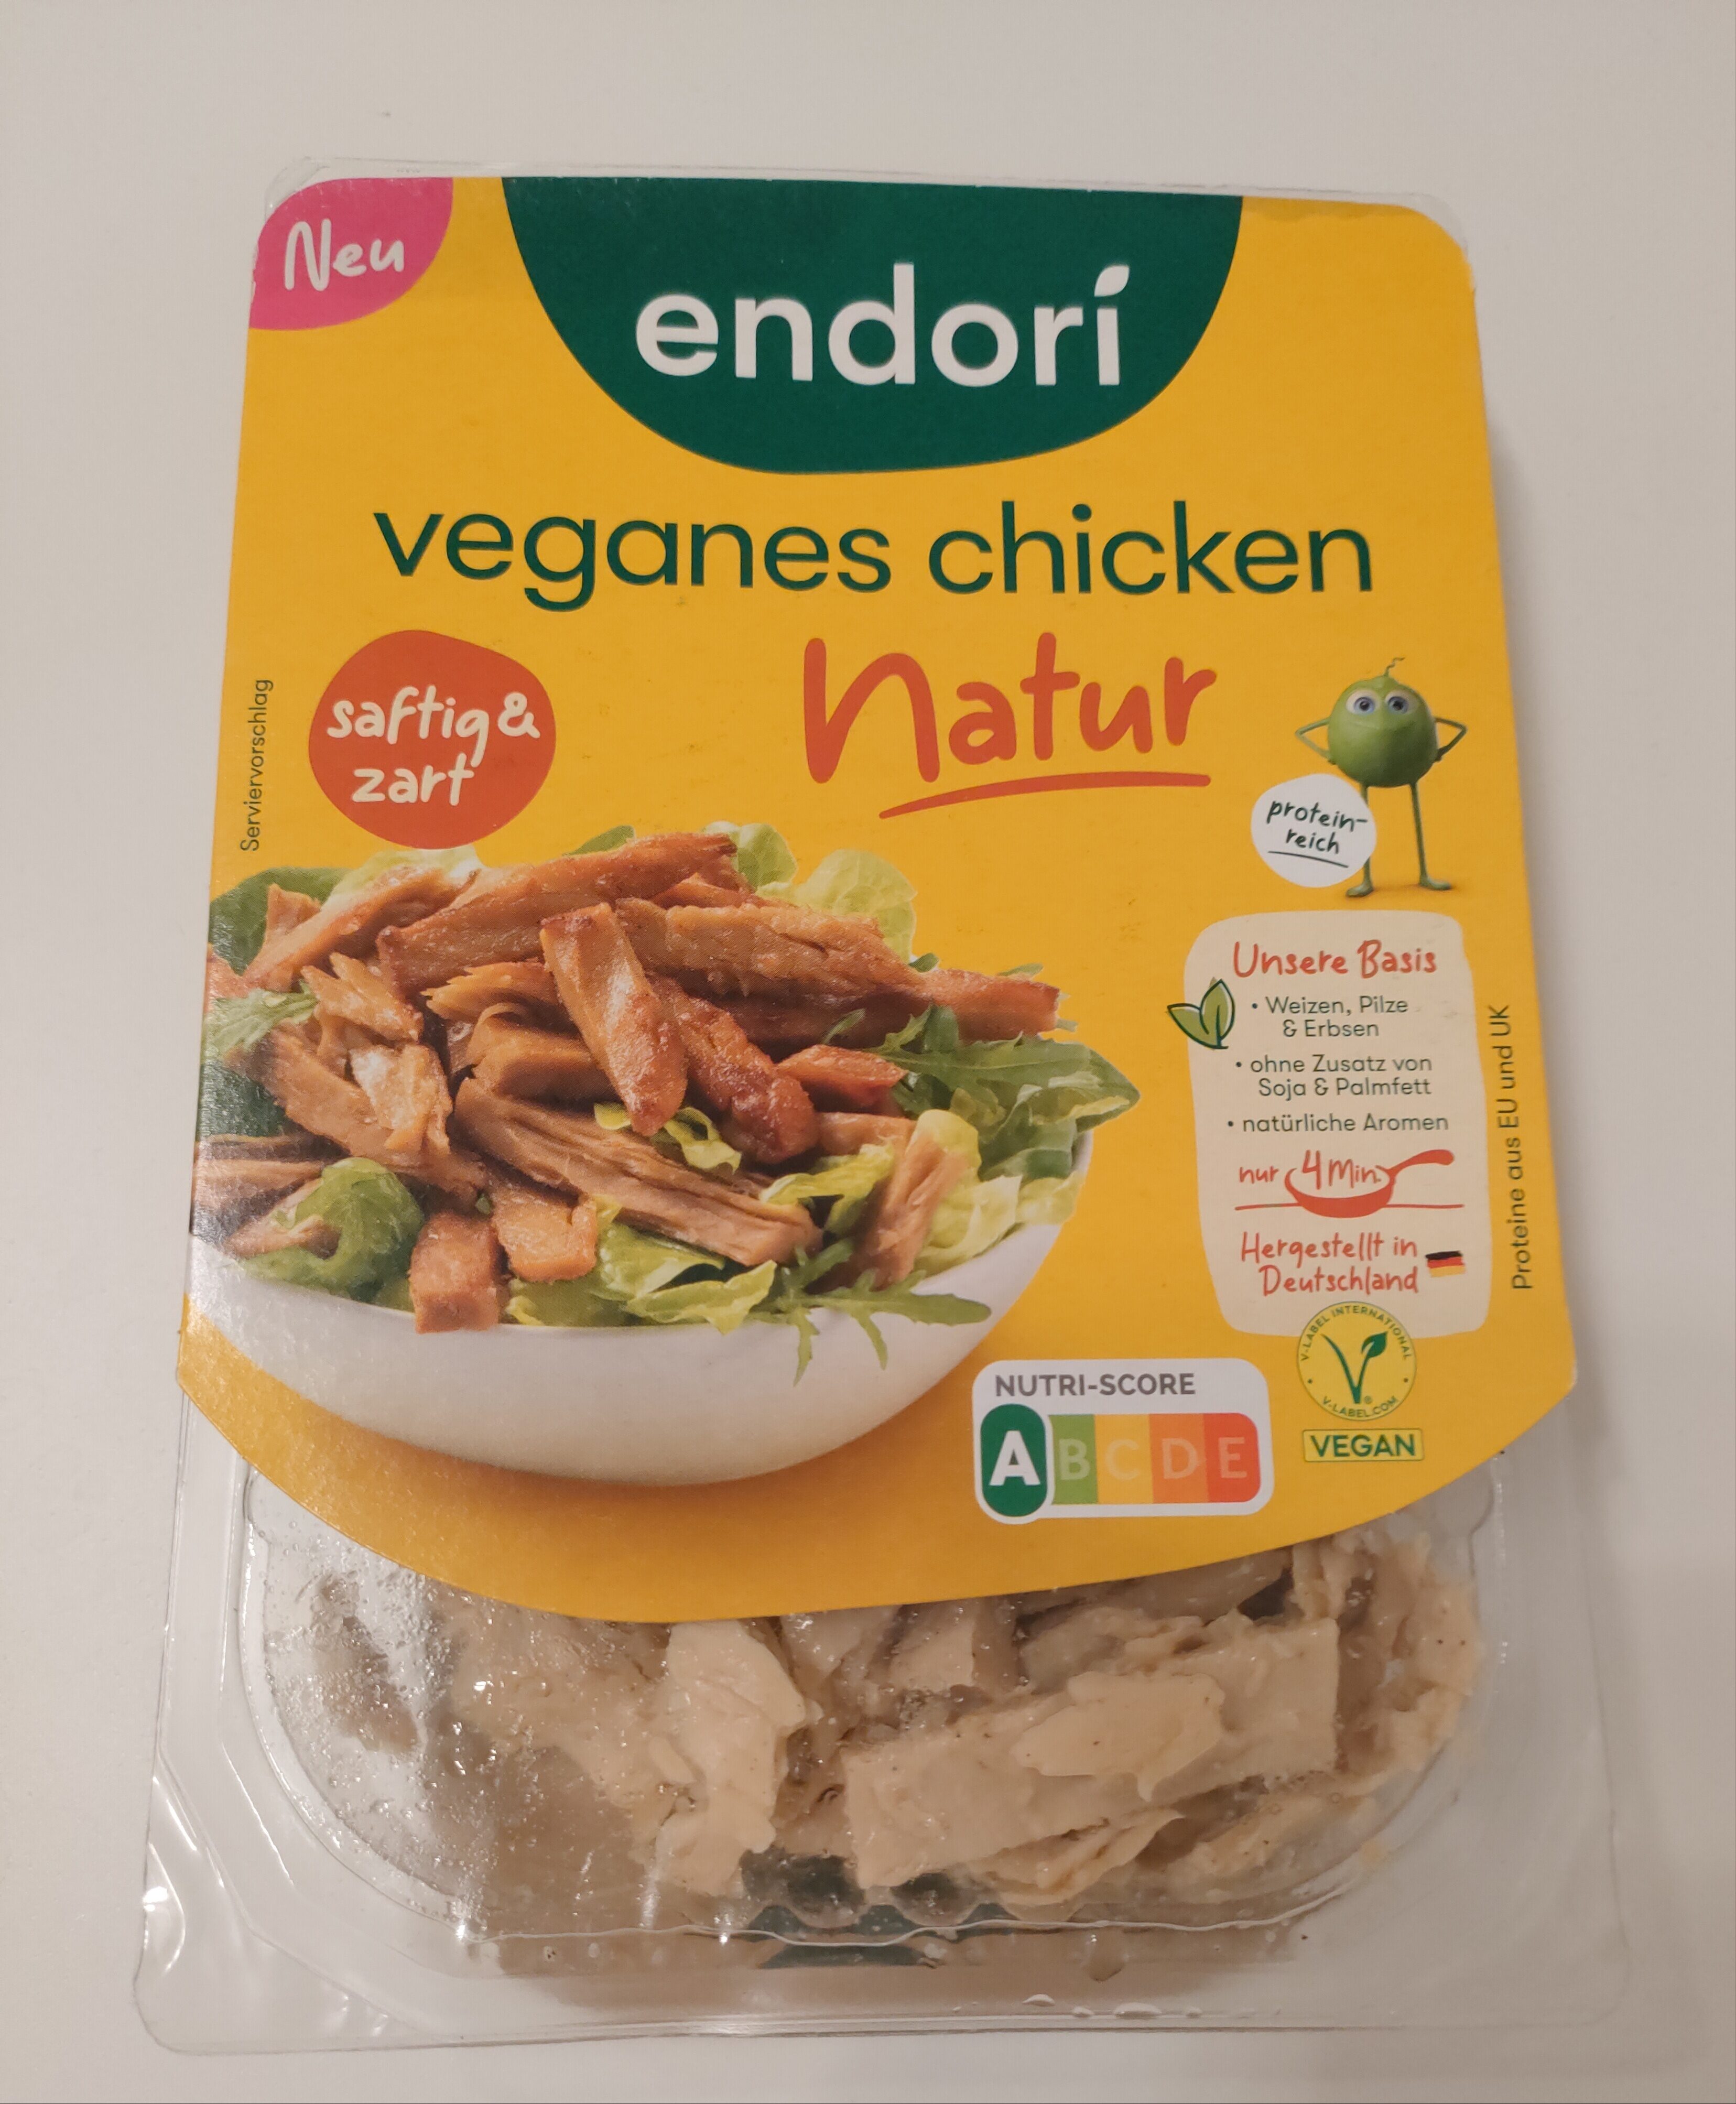 Veganes chicken natur - Produkt